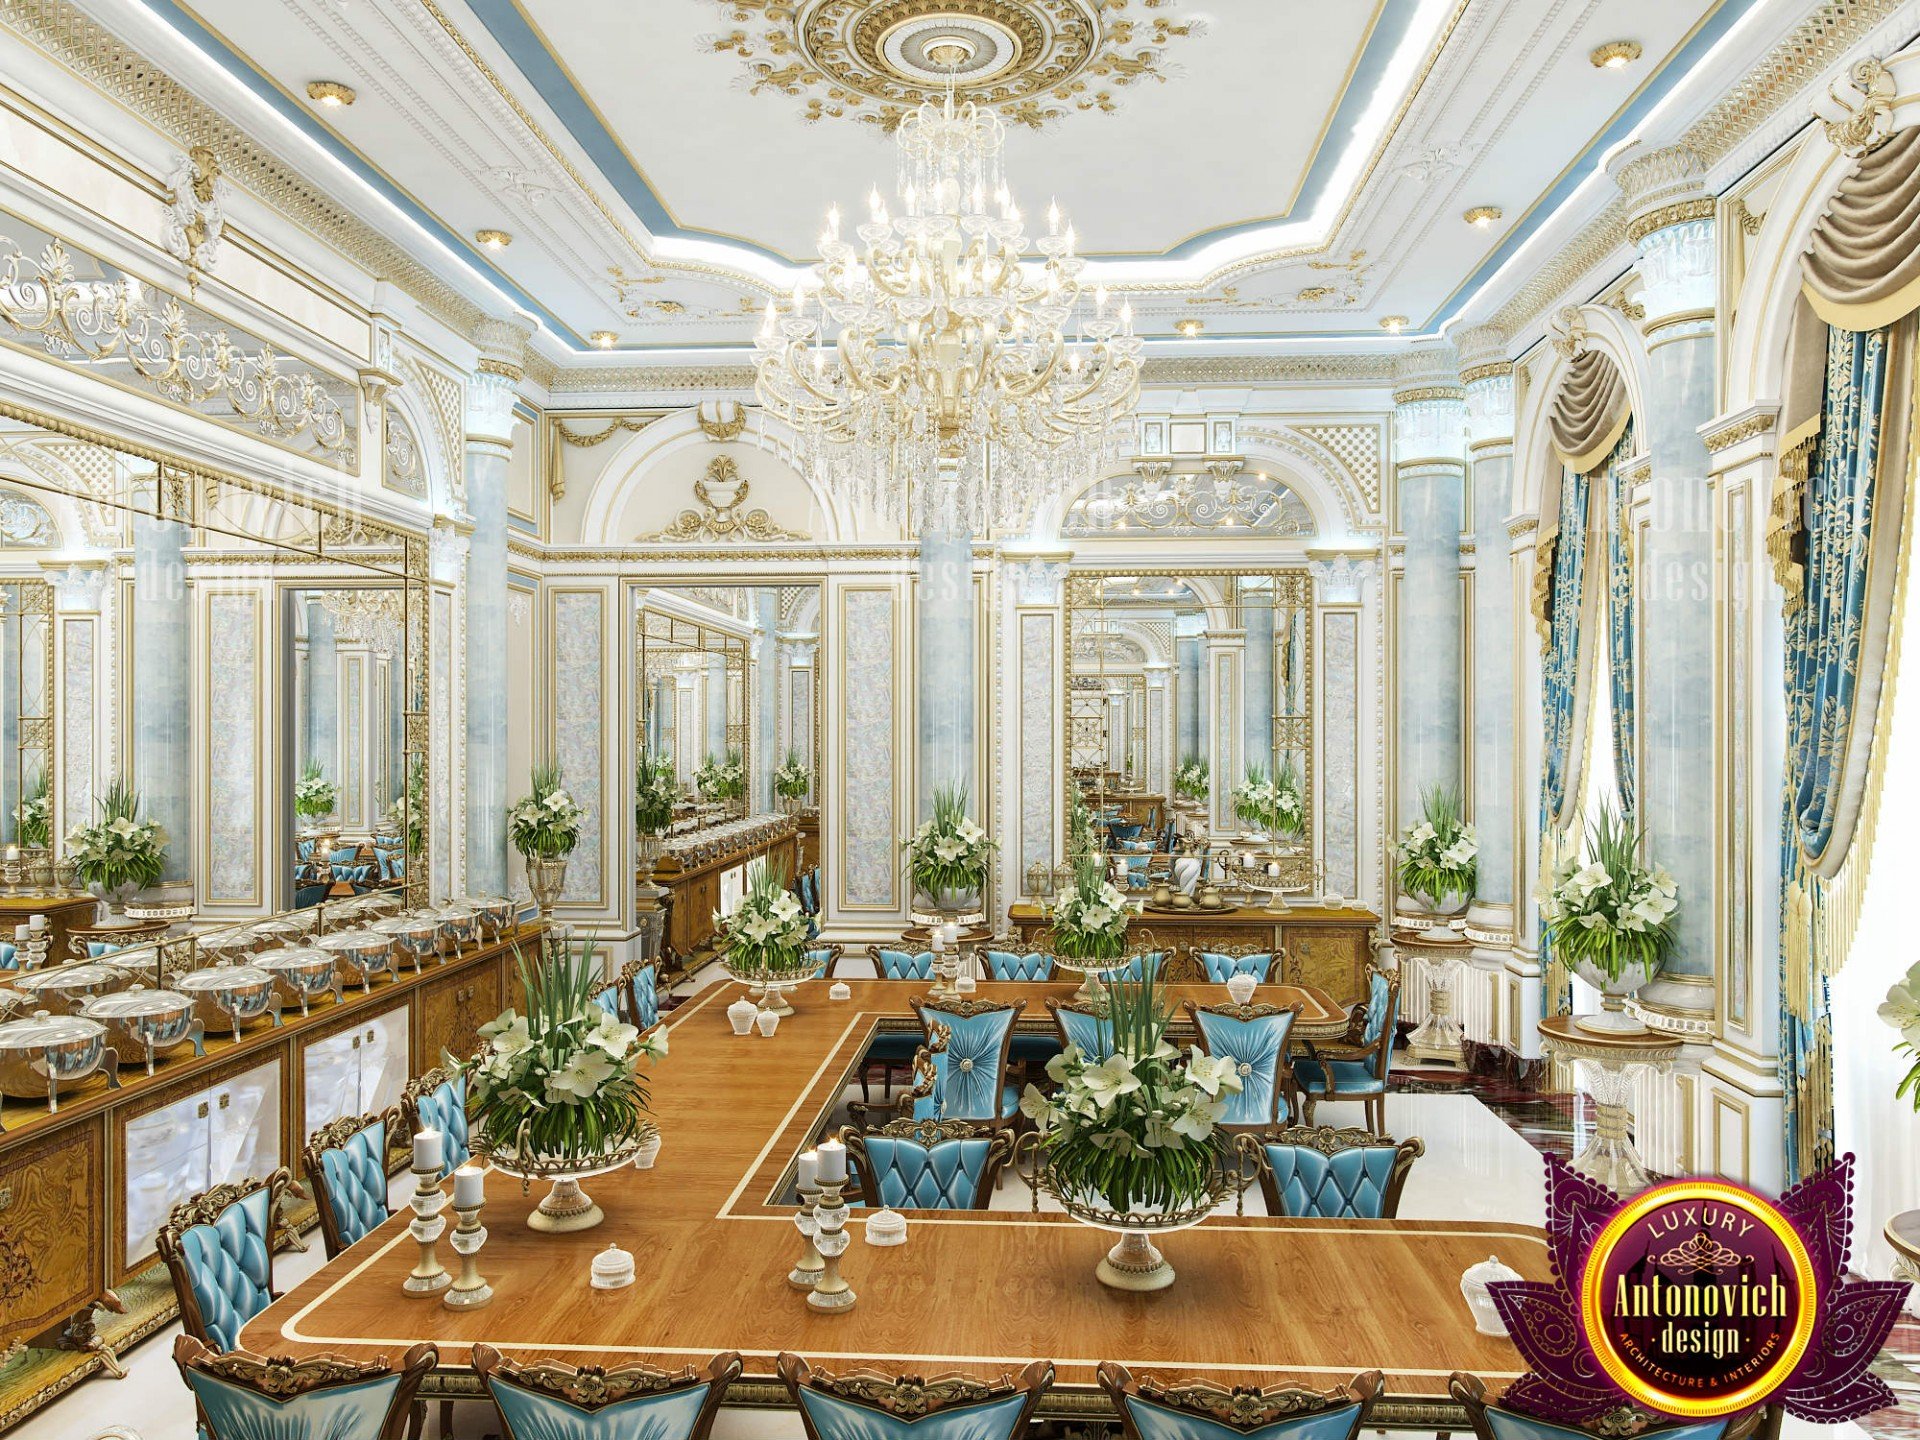 royal dining room decor